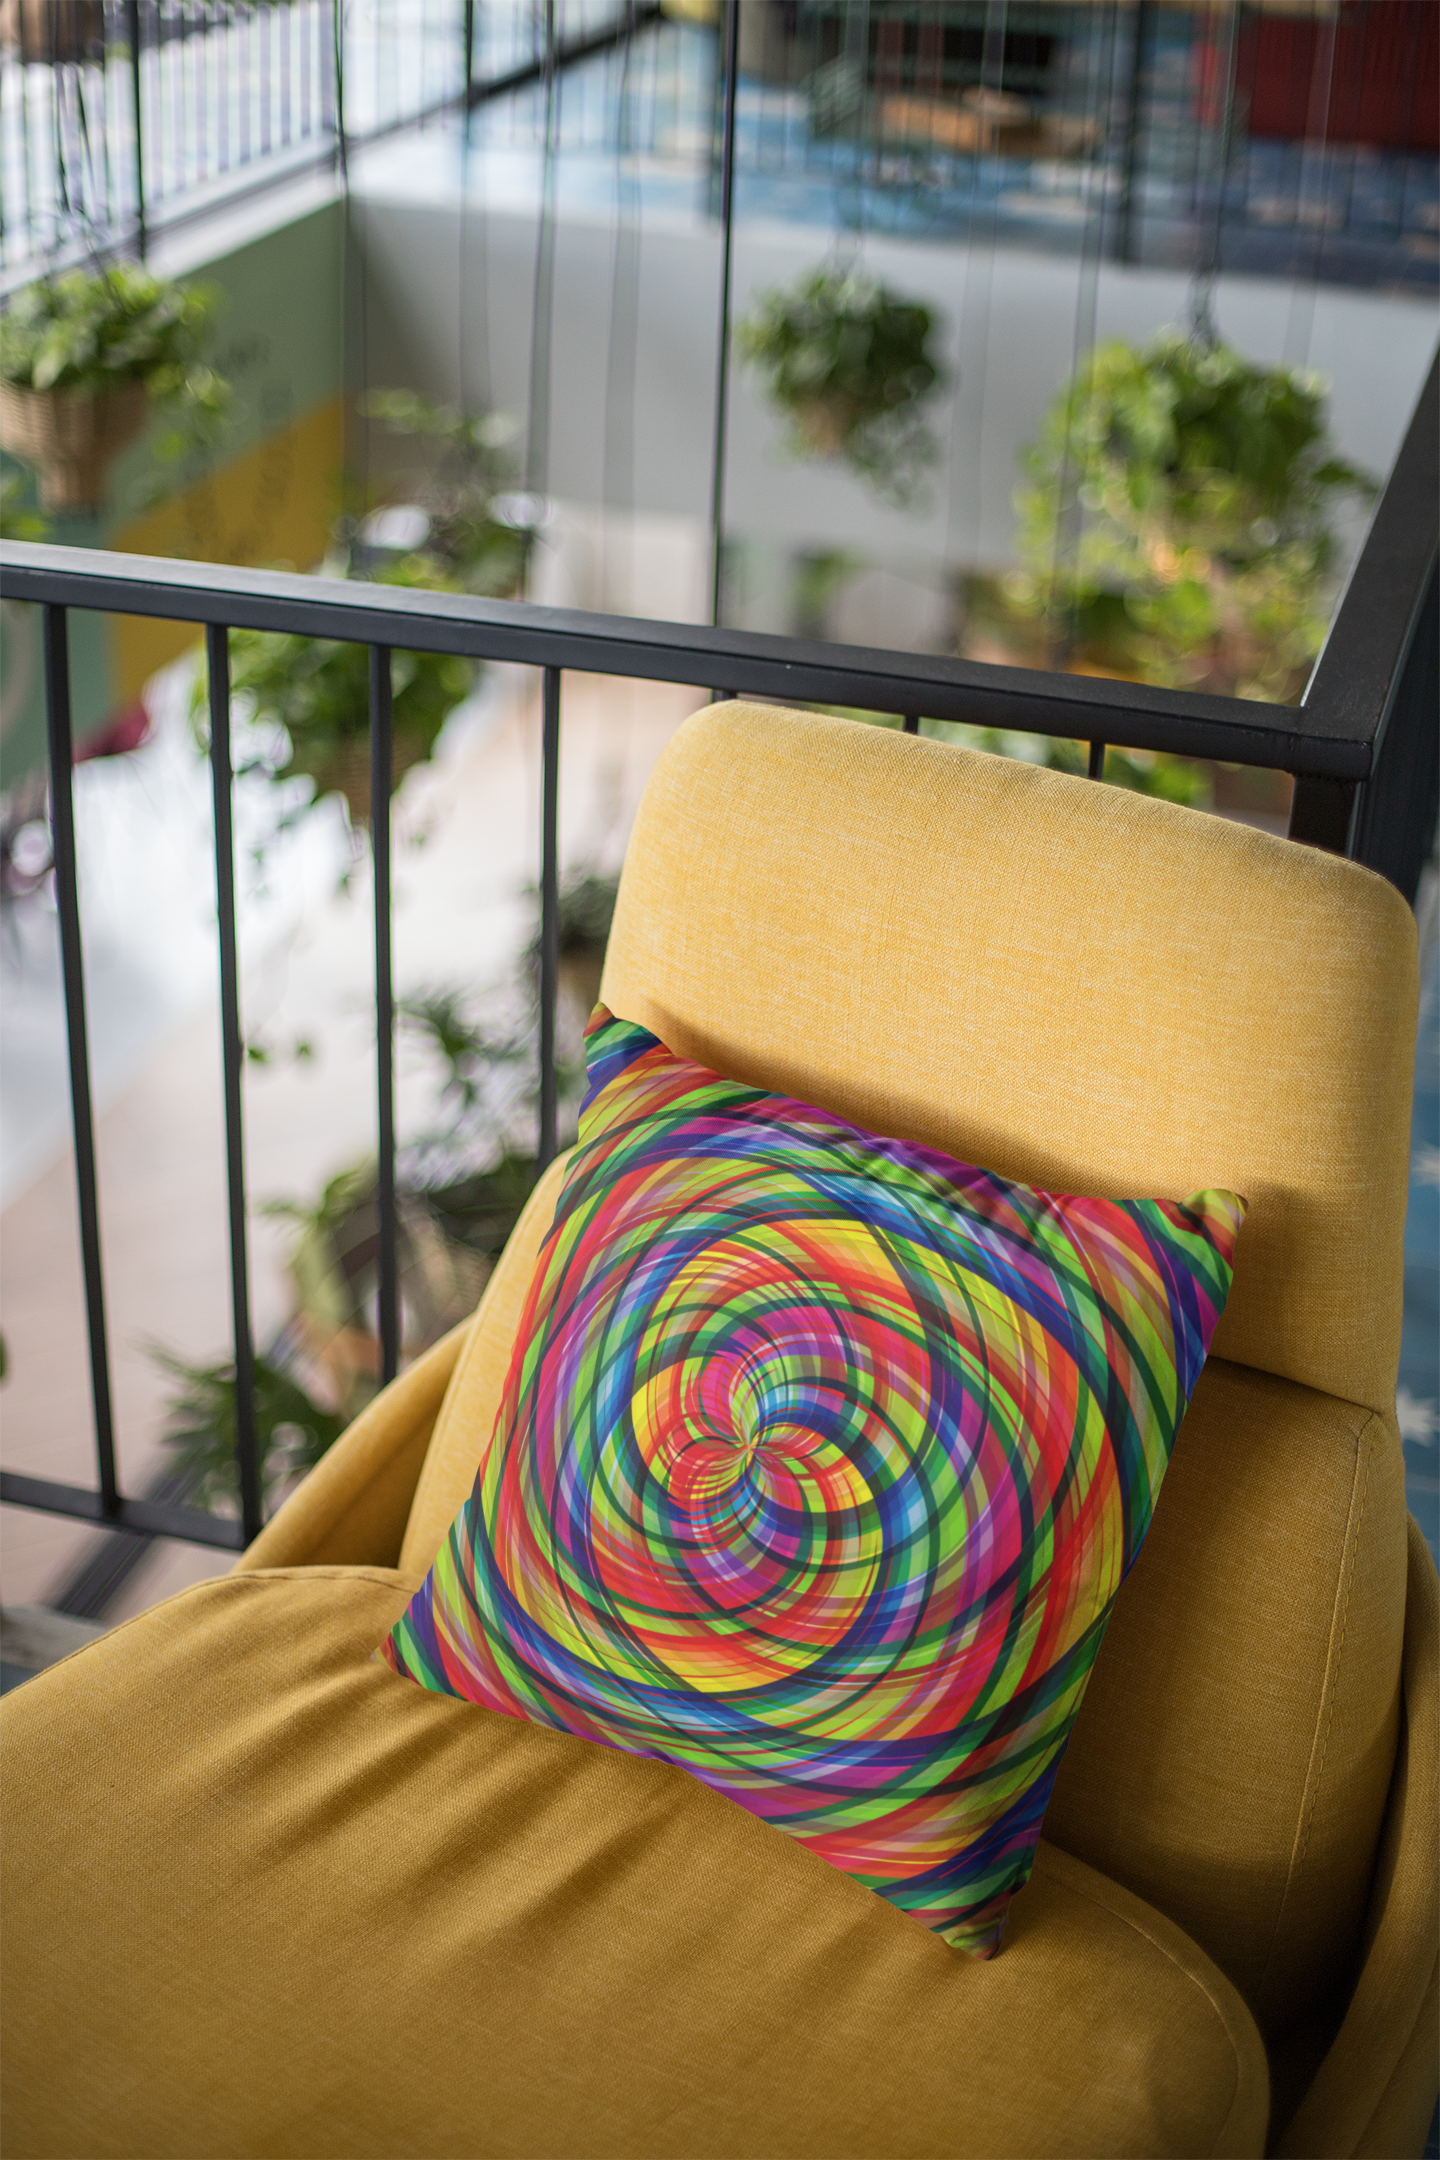 Rainbow Pride Color Illusion Pattern Pillow (Variant II)